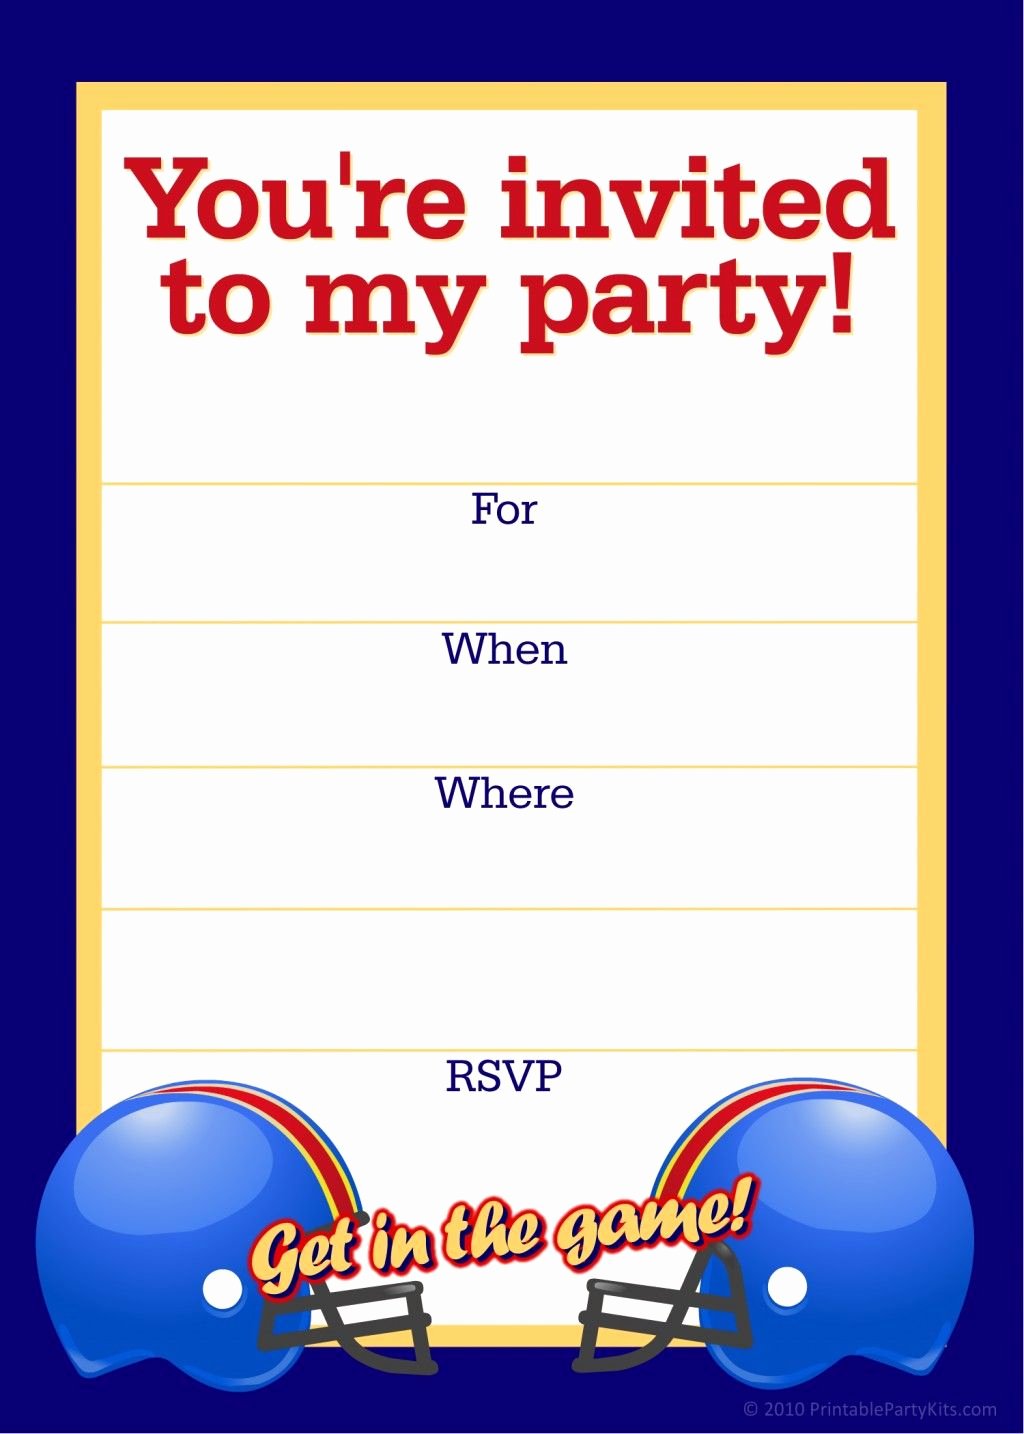 Free Birthday Party Invitation Templates Unique Free Printable Sports Birthday Party Invitations Templates